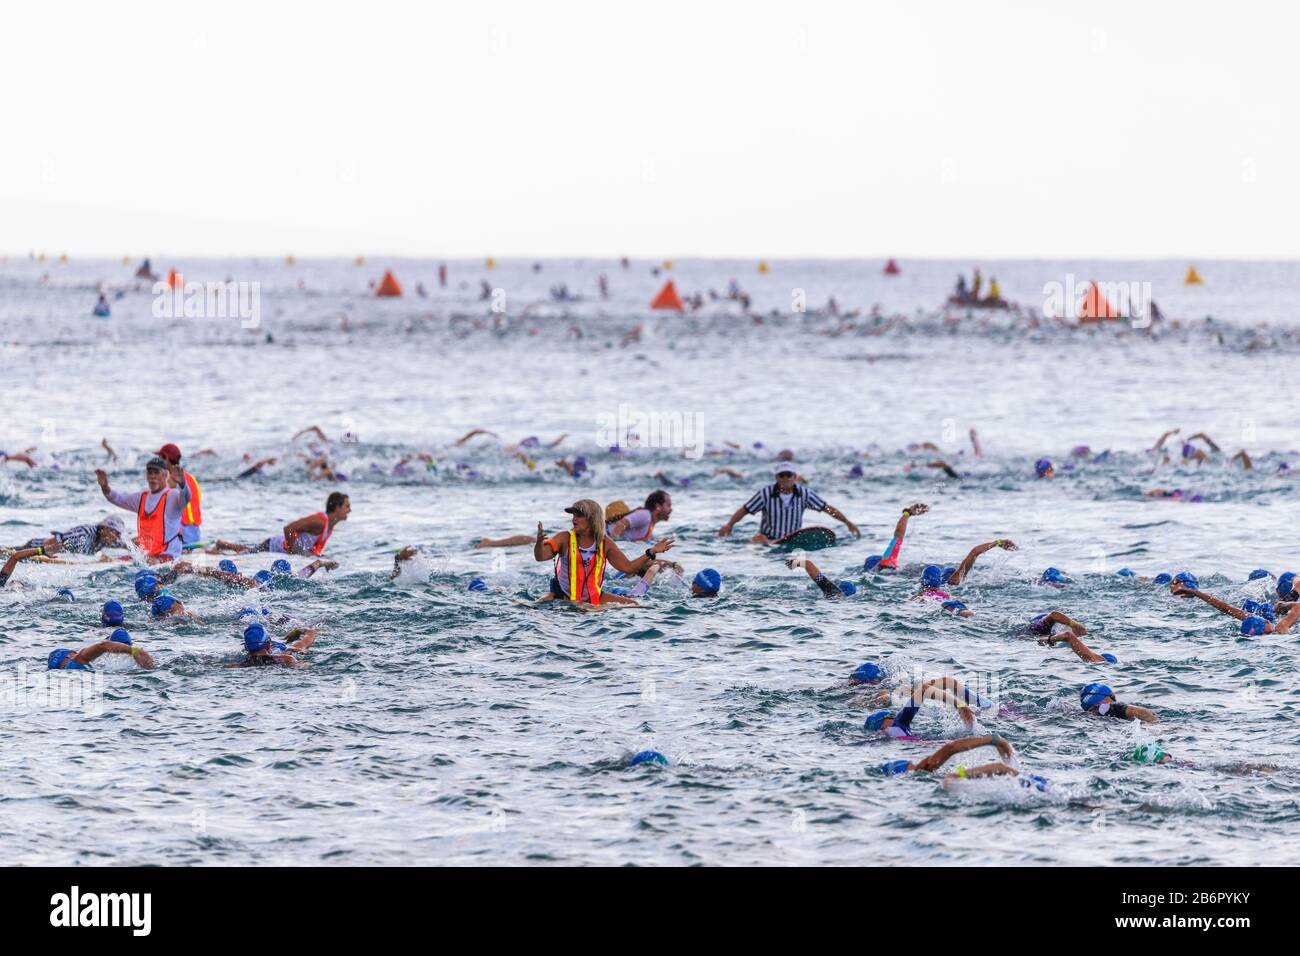 USA, Hawaii, Big Island, Kona, Ironman Kona triathlon, atleti di nuoto Foto Stock